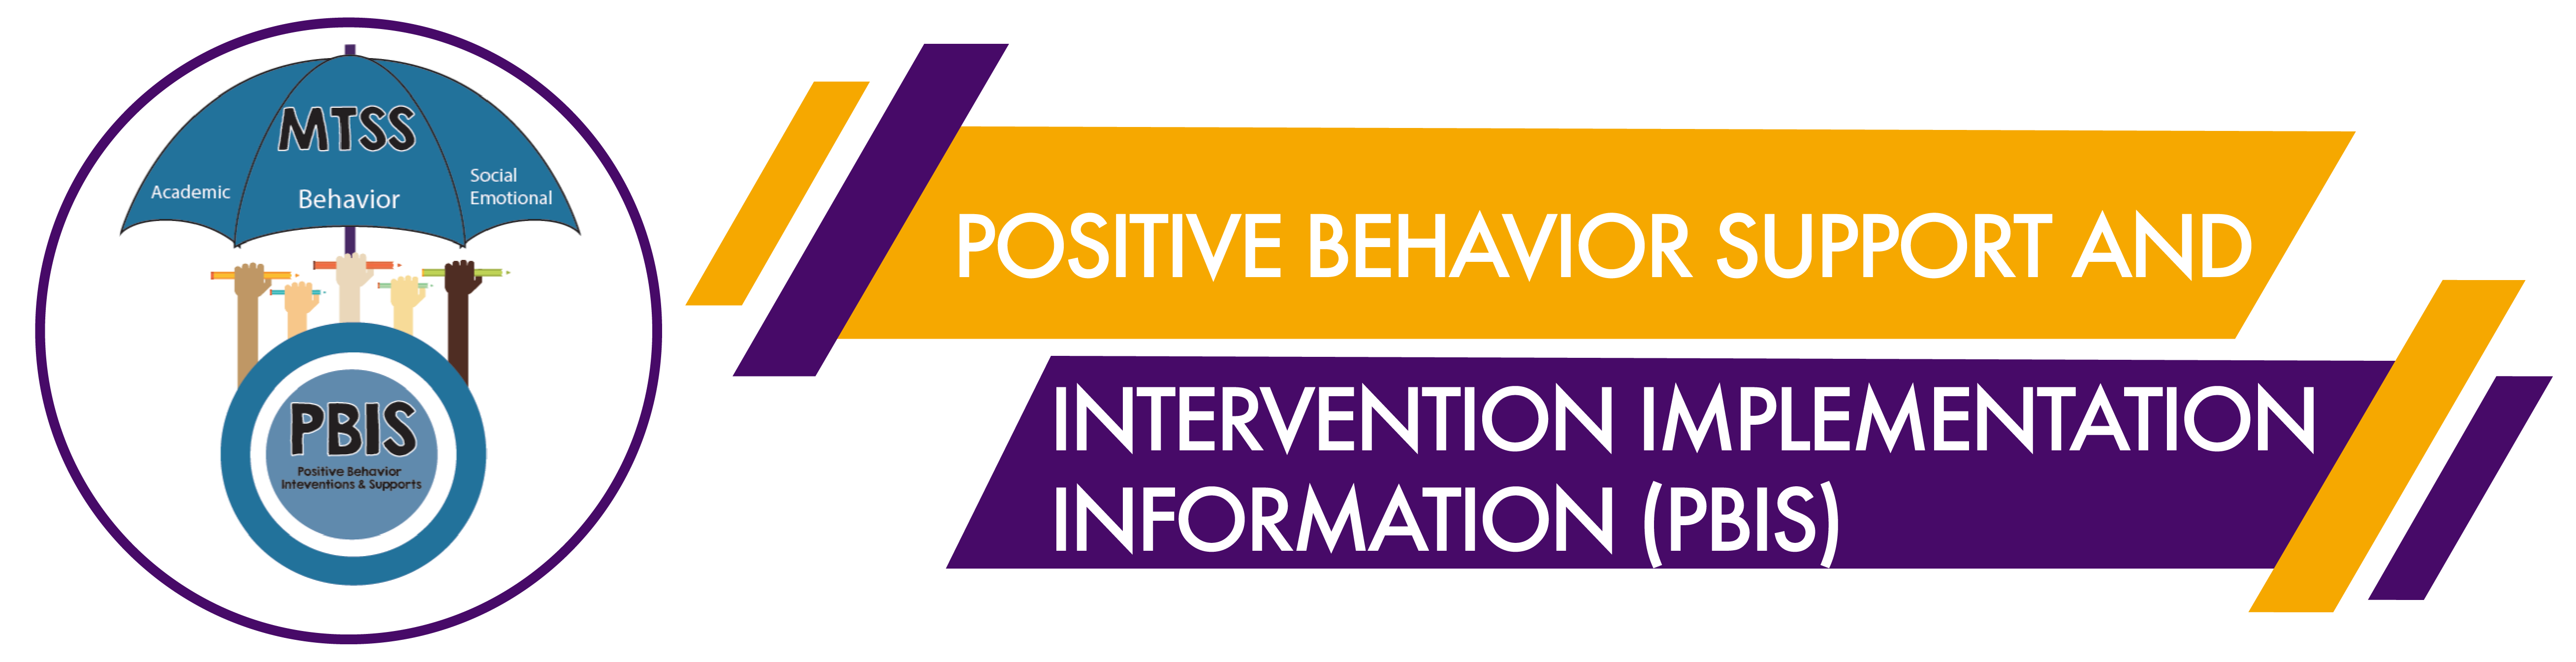 Positive Behavior Support and Intervention Implementation Information (PBIS) banner